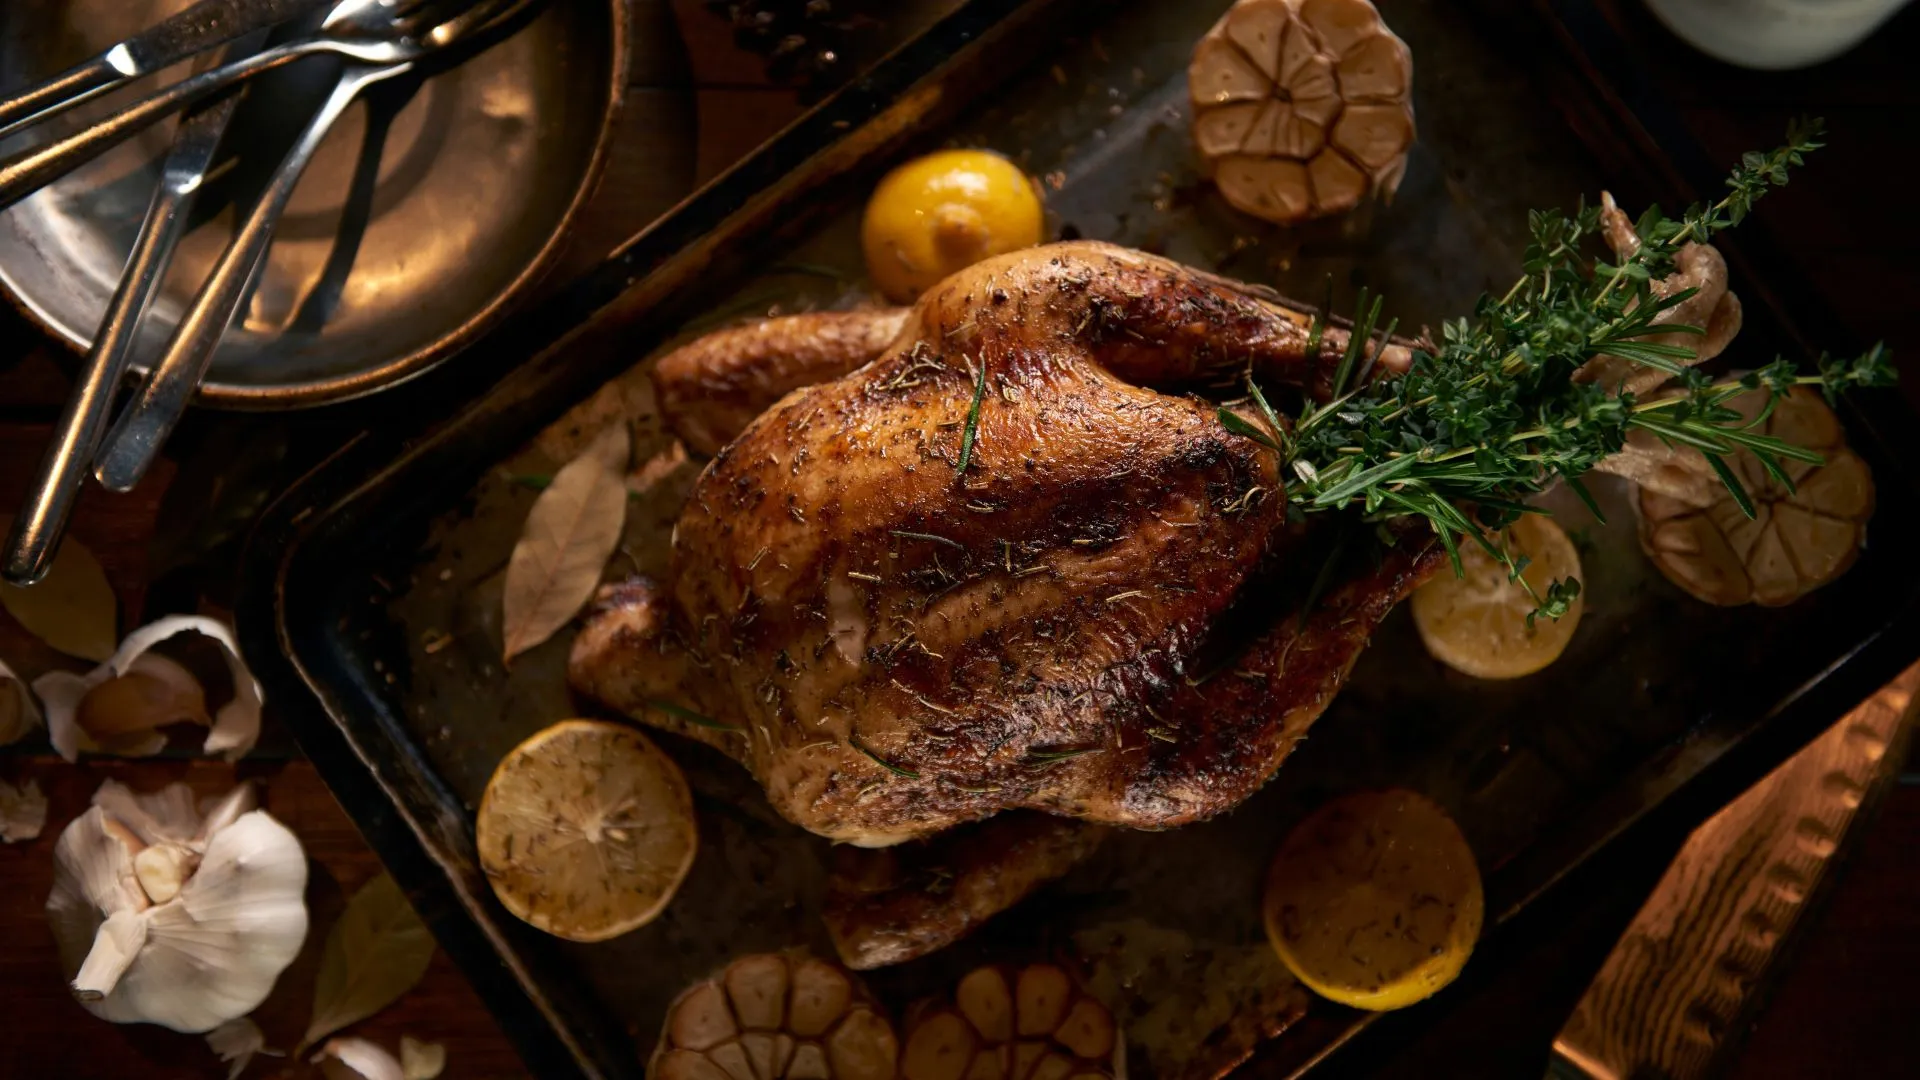 Roast Turkey Recipe